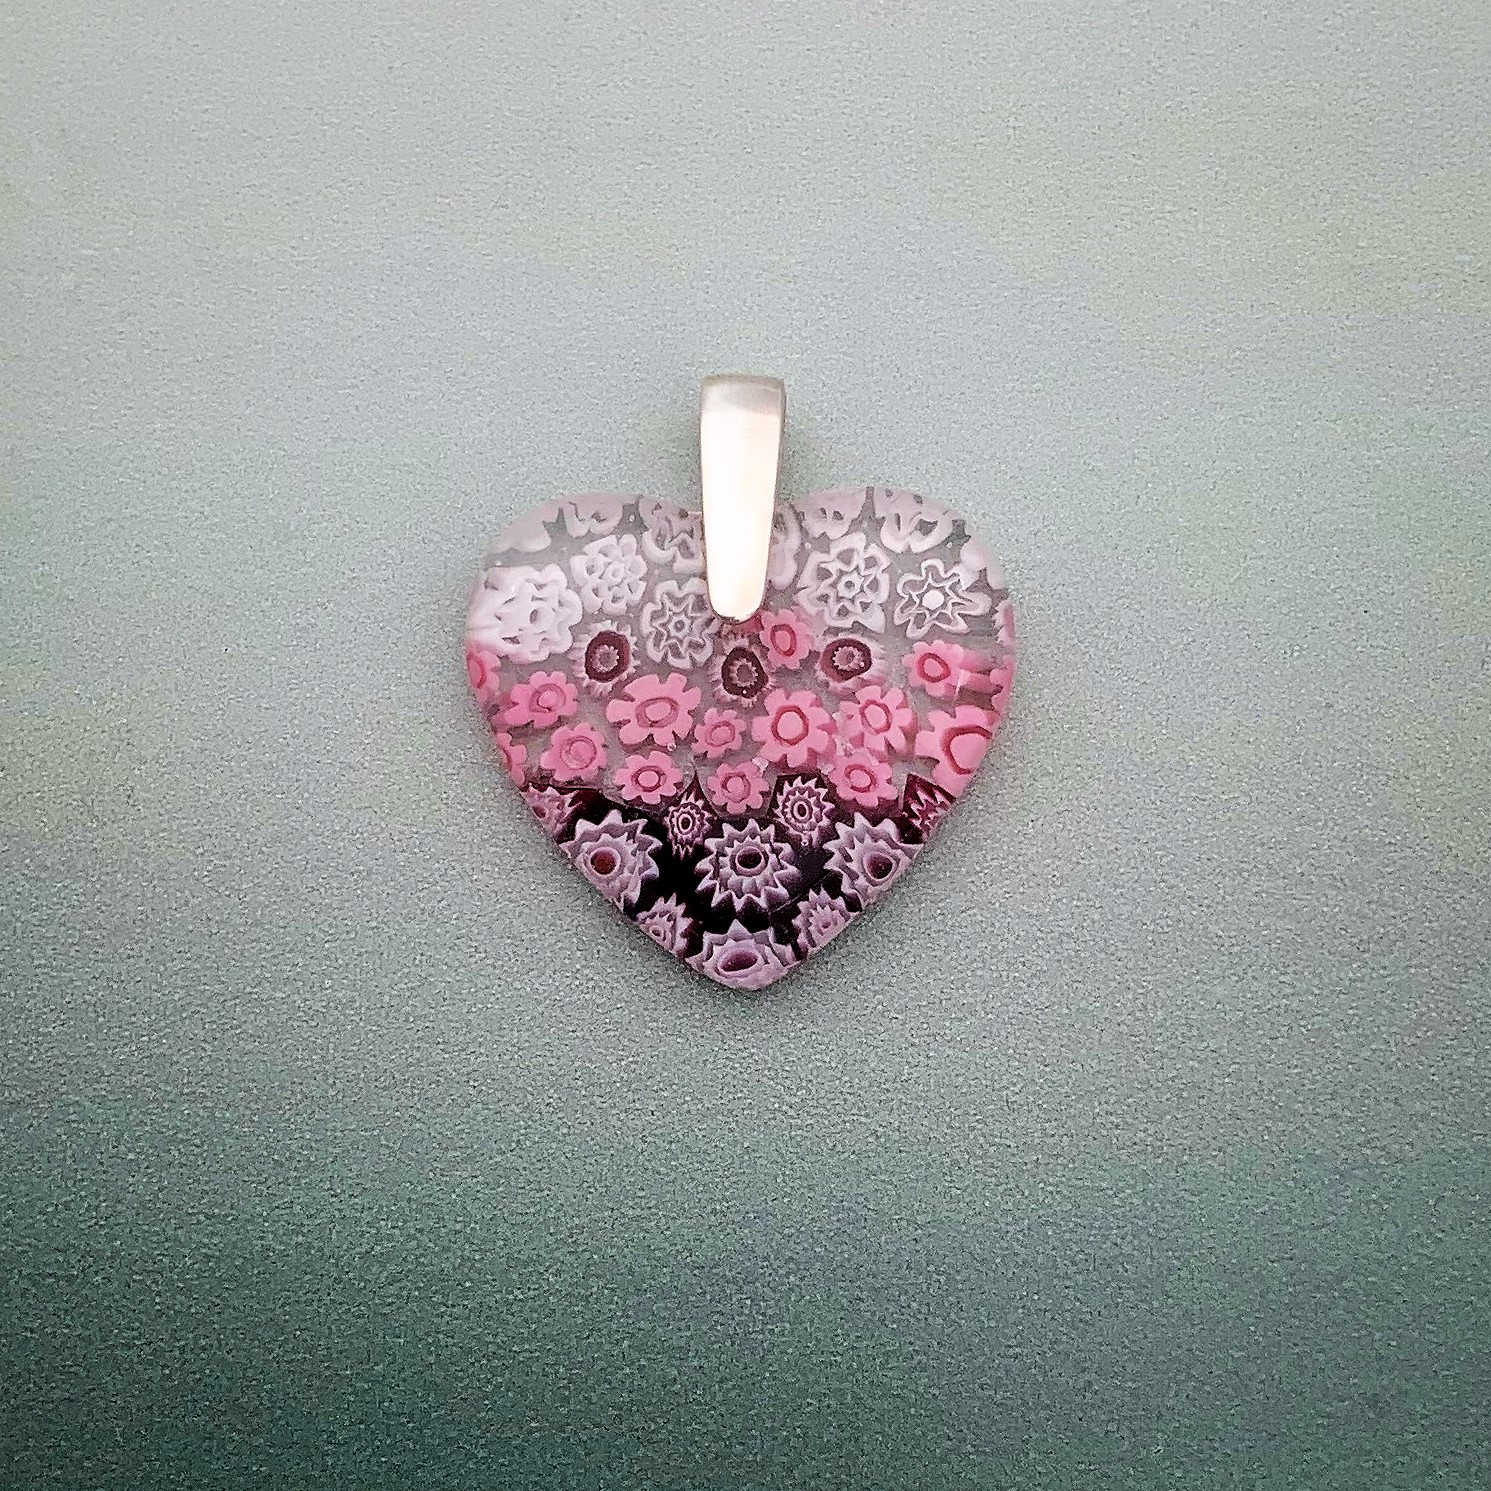 Fused Millefiori glass  small heart  pendant in rose cascade fleurette